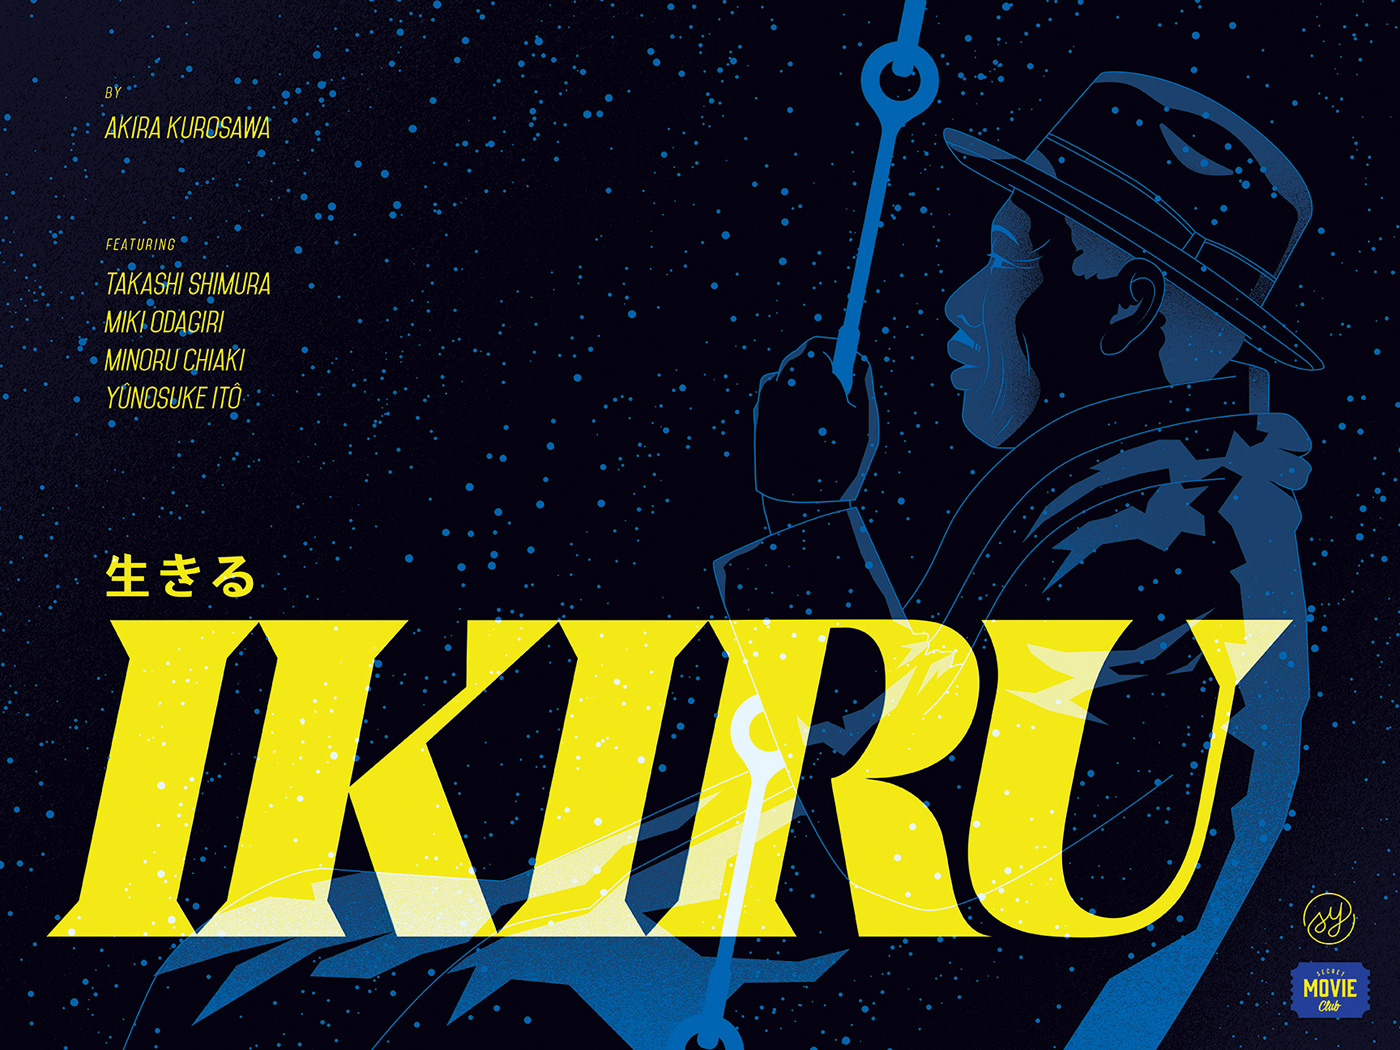 Ikiru movie poster film poster ILLUSTRATION  Akira Kurosawa kurosawa blue yellow fan poster Poster Design adobeawards